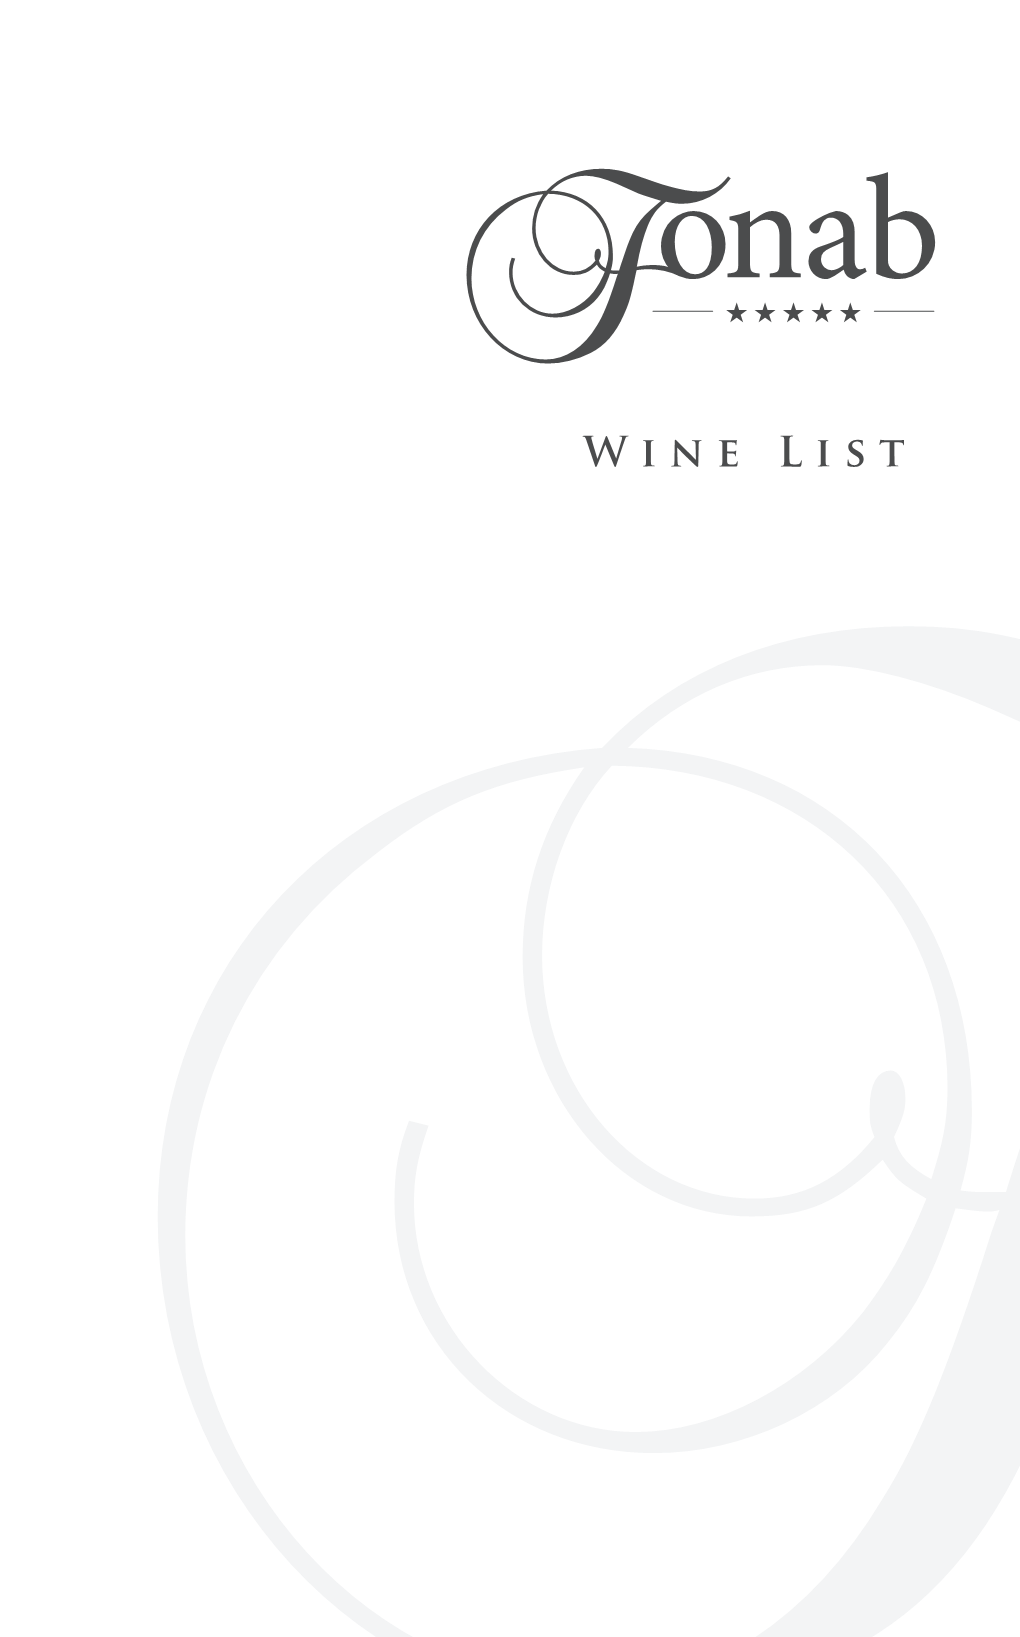 Wine List Introduction